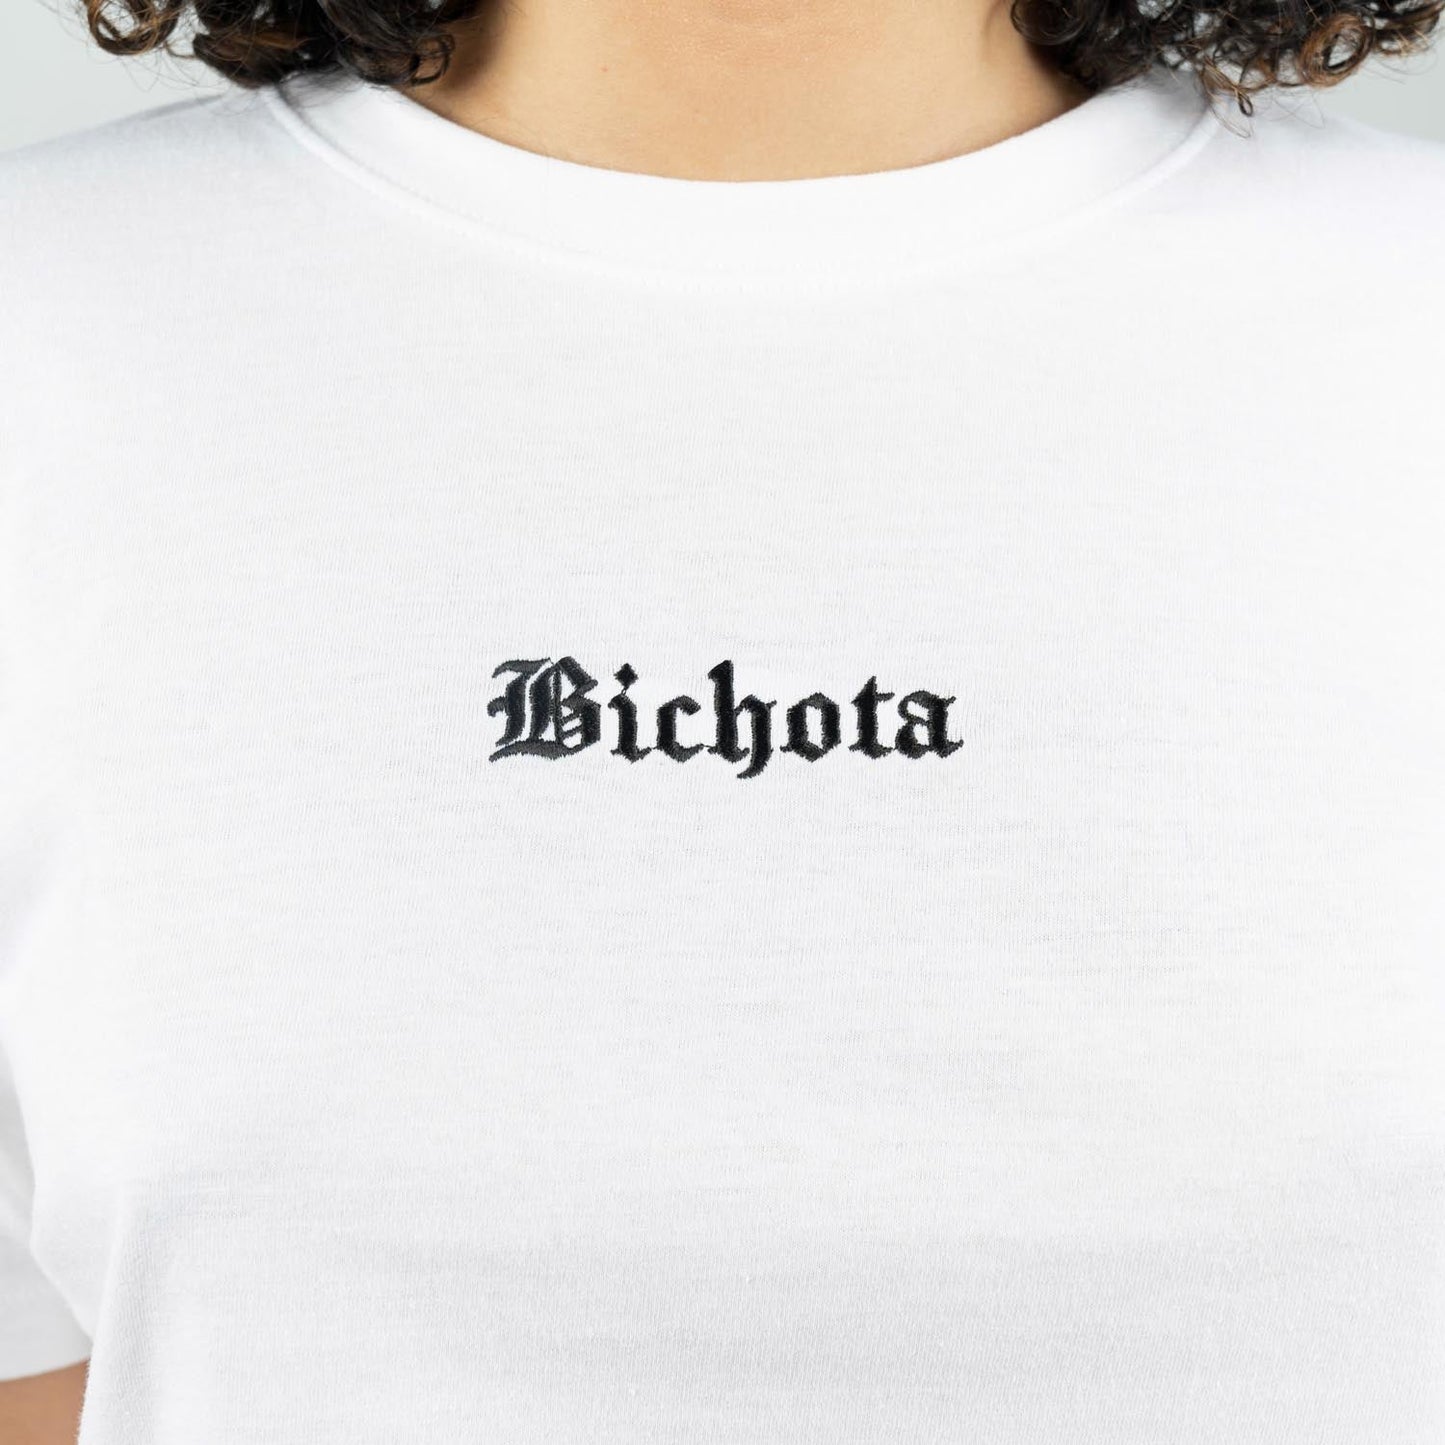 Camiseta Bordado Bichota - Reguecool